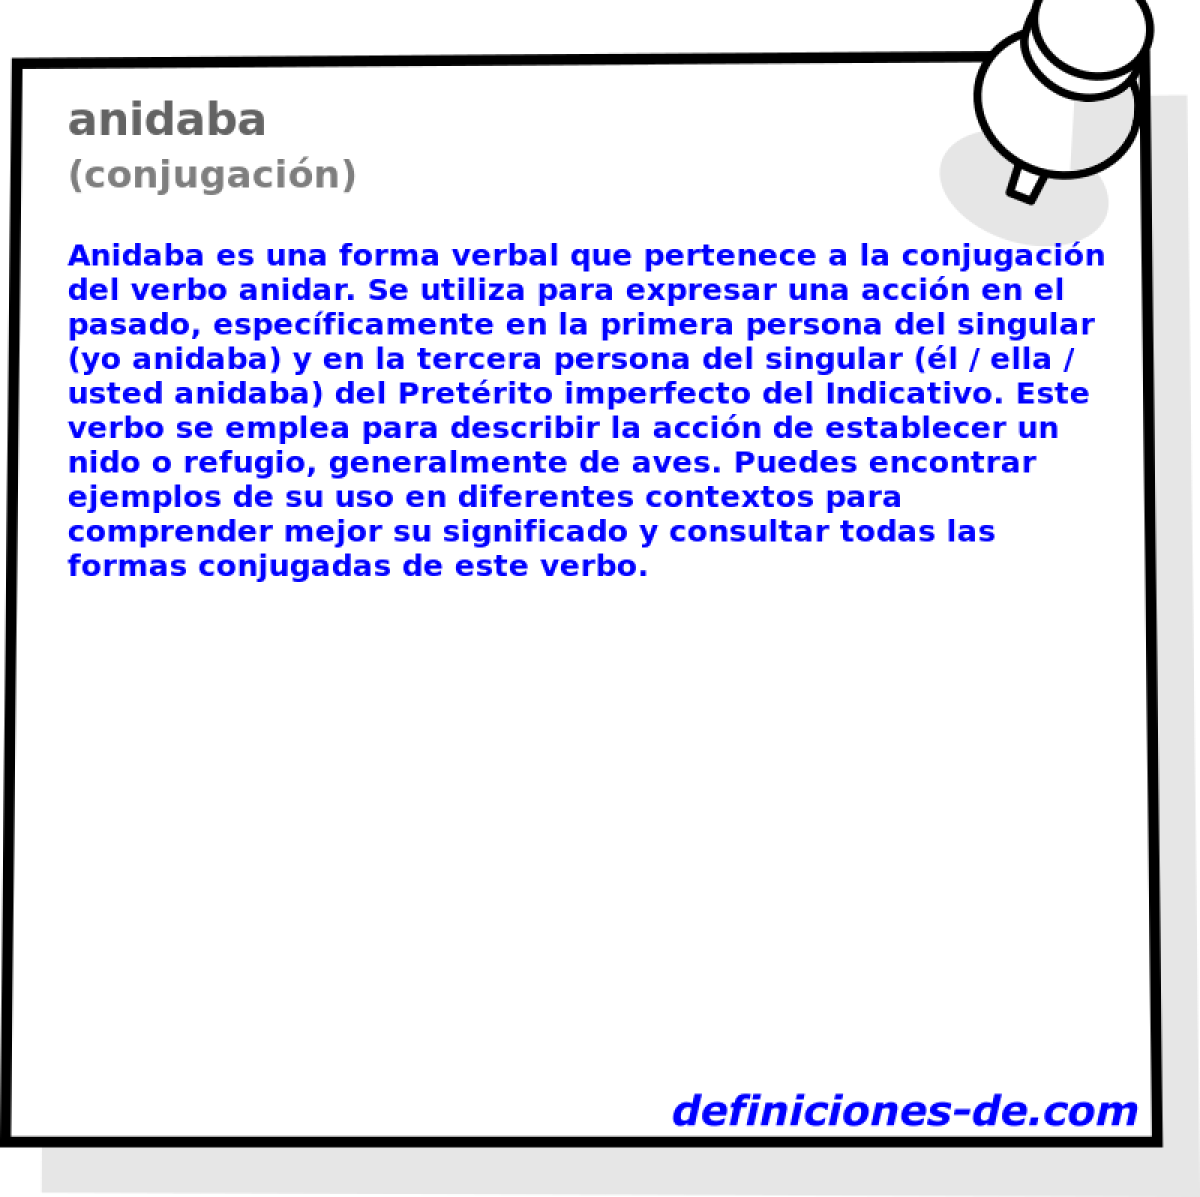 anidaba (conjugacin)